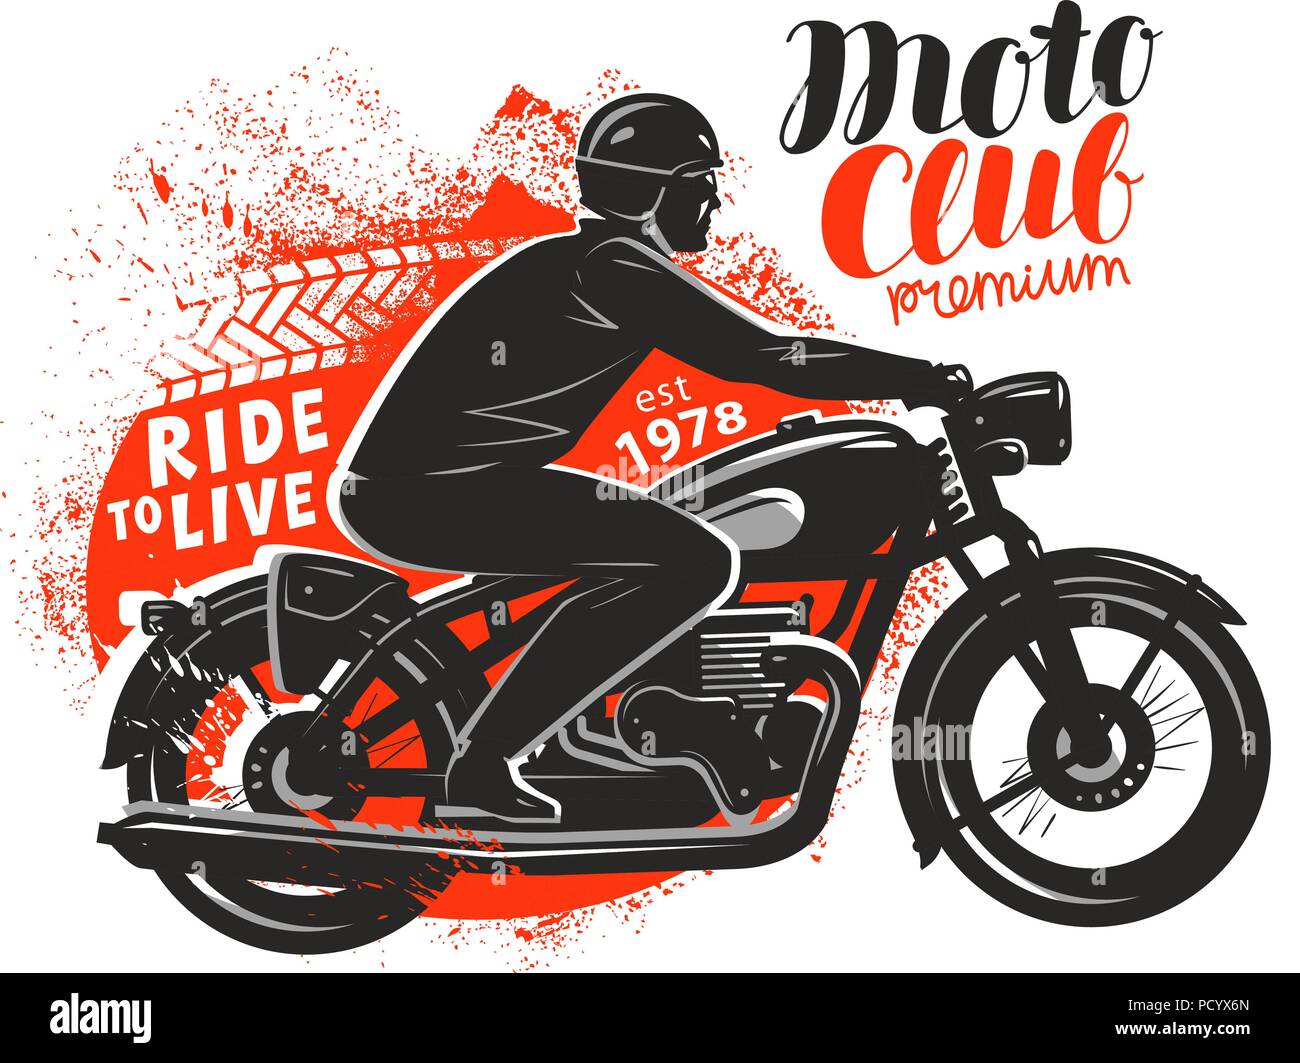 Motor Club, Banner oder Poster. Biker reitet ein retro Motorrad. Vector Illustration Stock Vektor